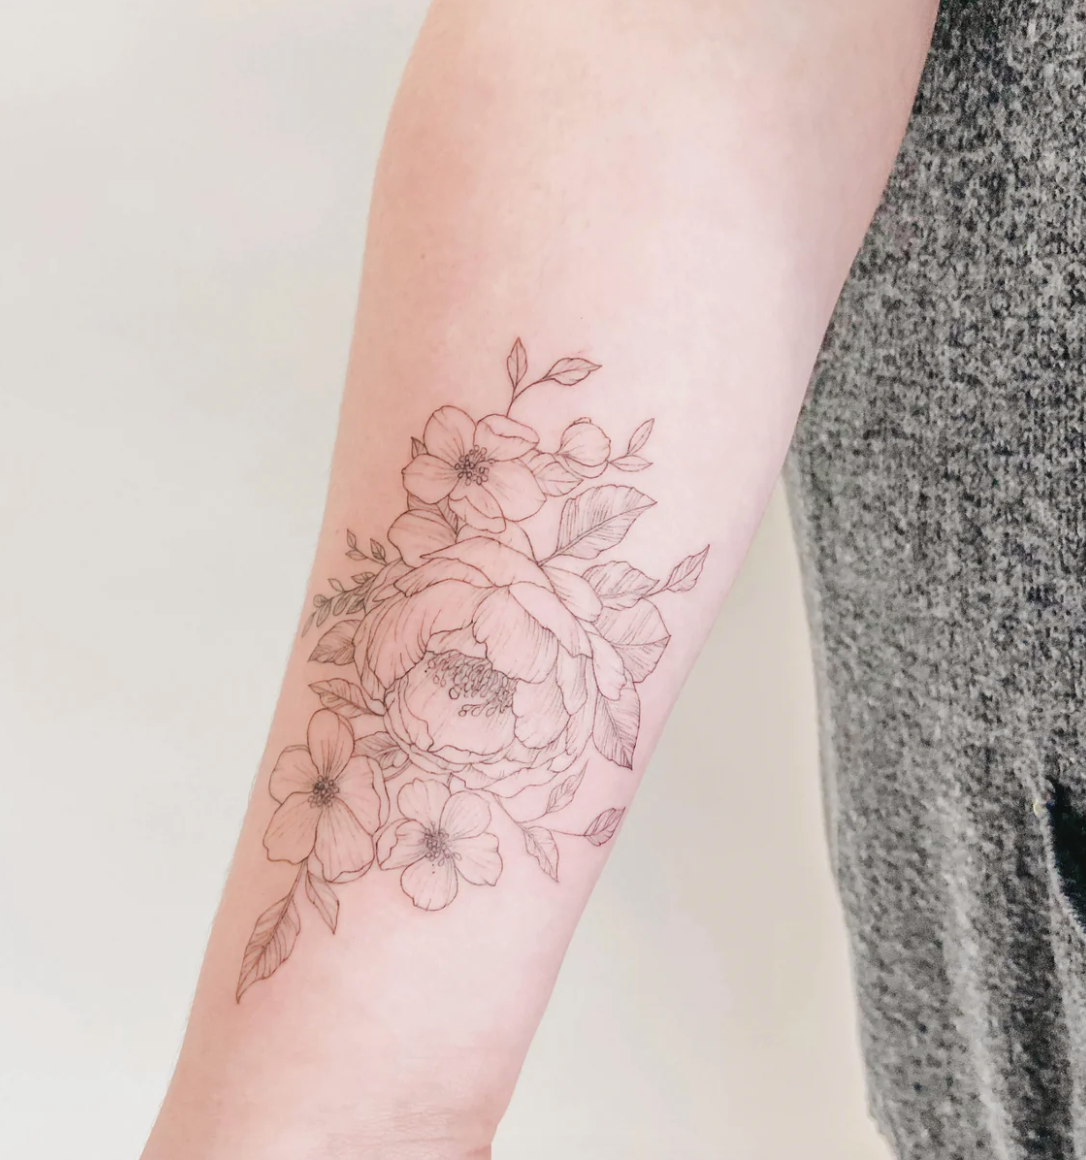 Louise Botterill on Tumblr: Inner arm ditch mandala I did today. #mandala  #mandalatattoo #dotwork #dotworktattoo #freshtattoo #newtattoo  #tattoosofinstagram...